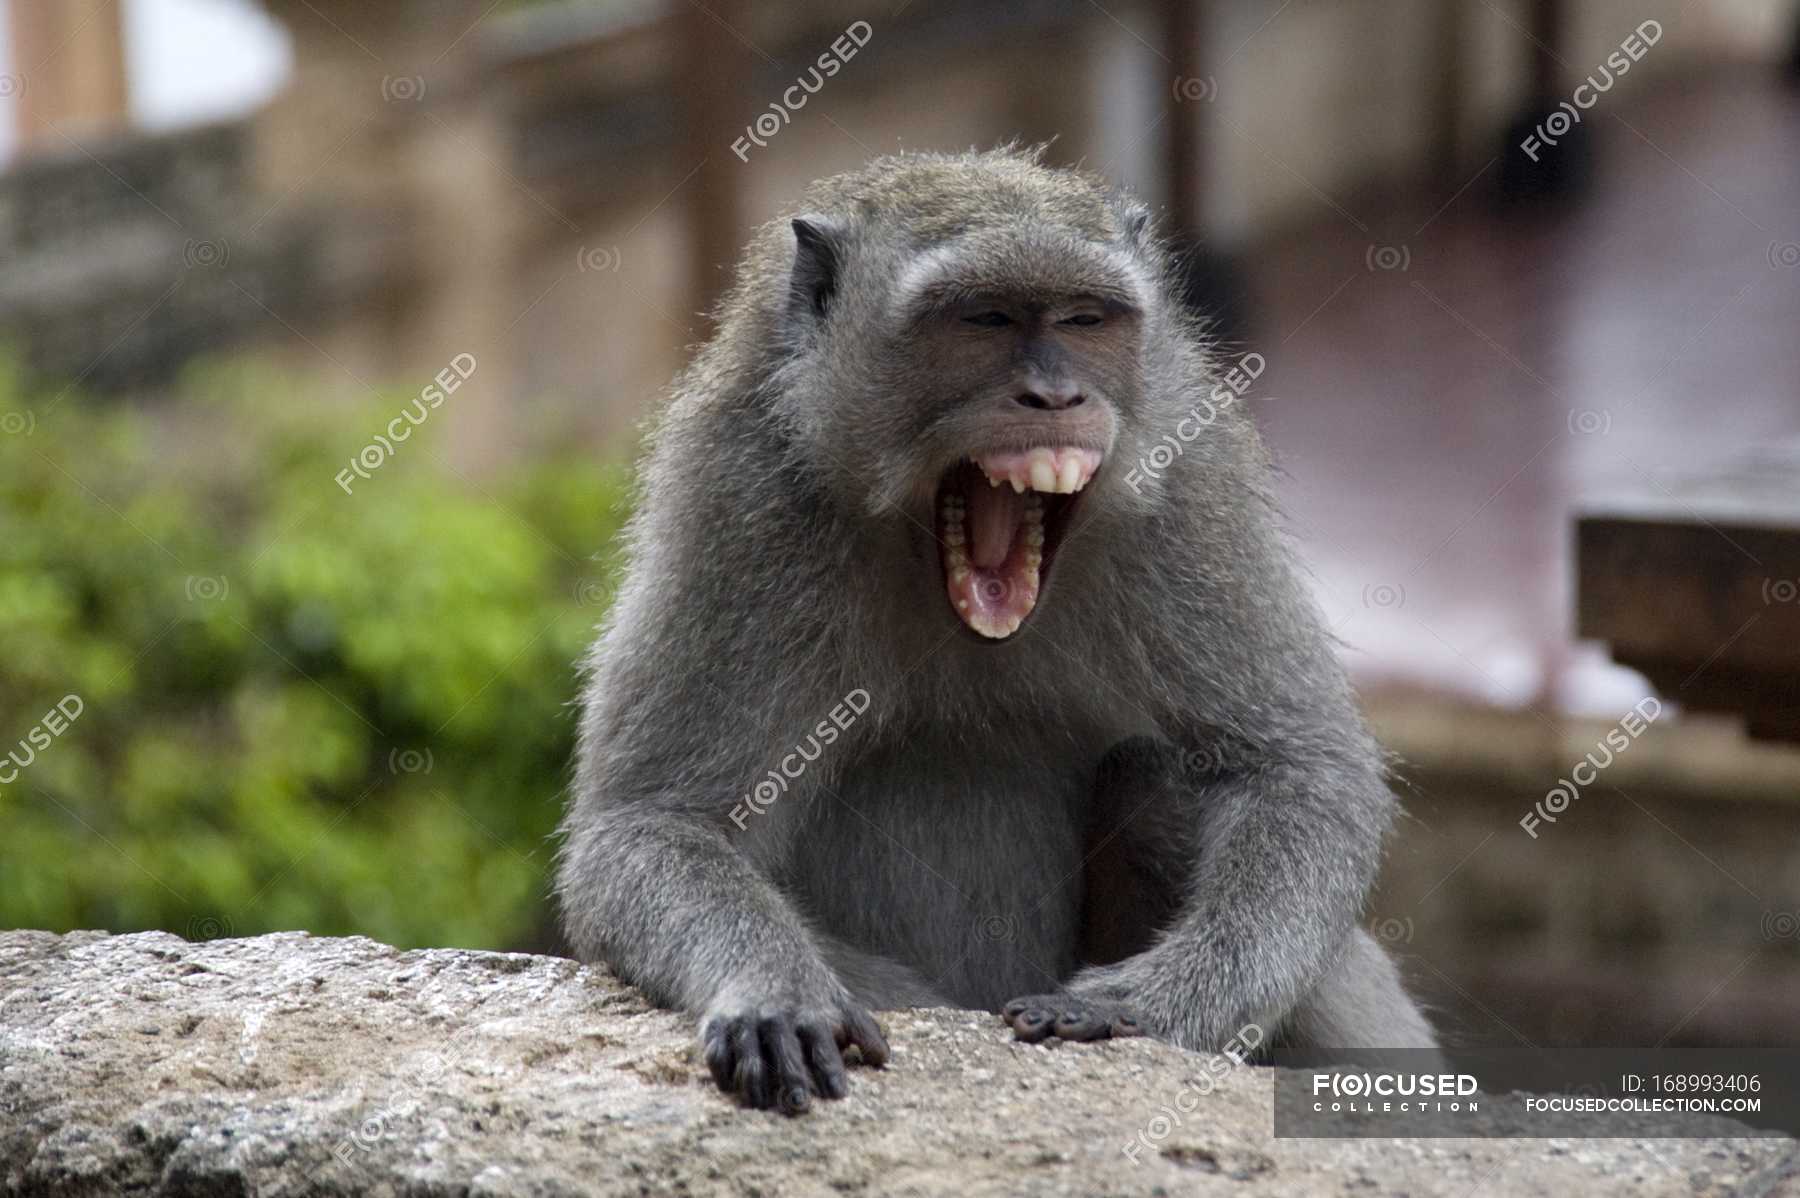 Monkey Screaming outdoors — Stock Photo | #168993406